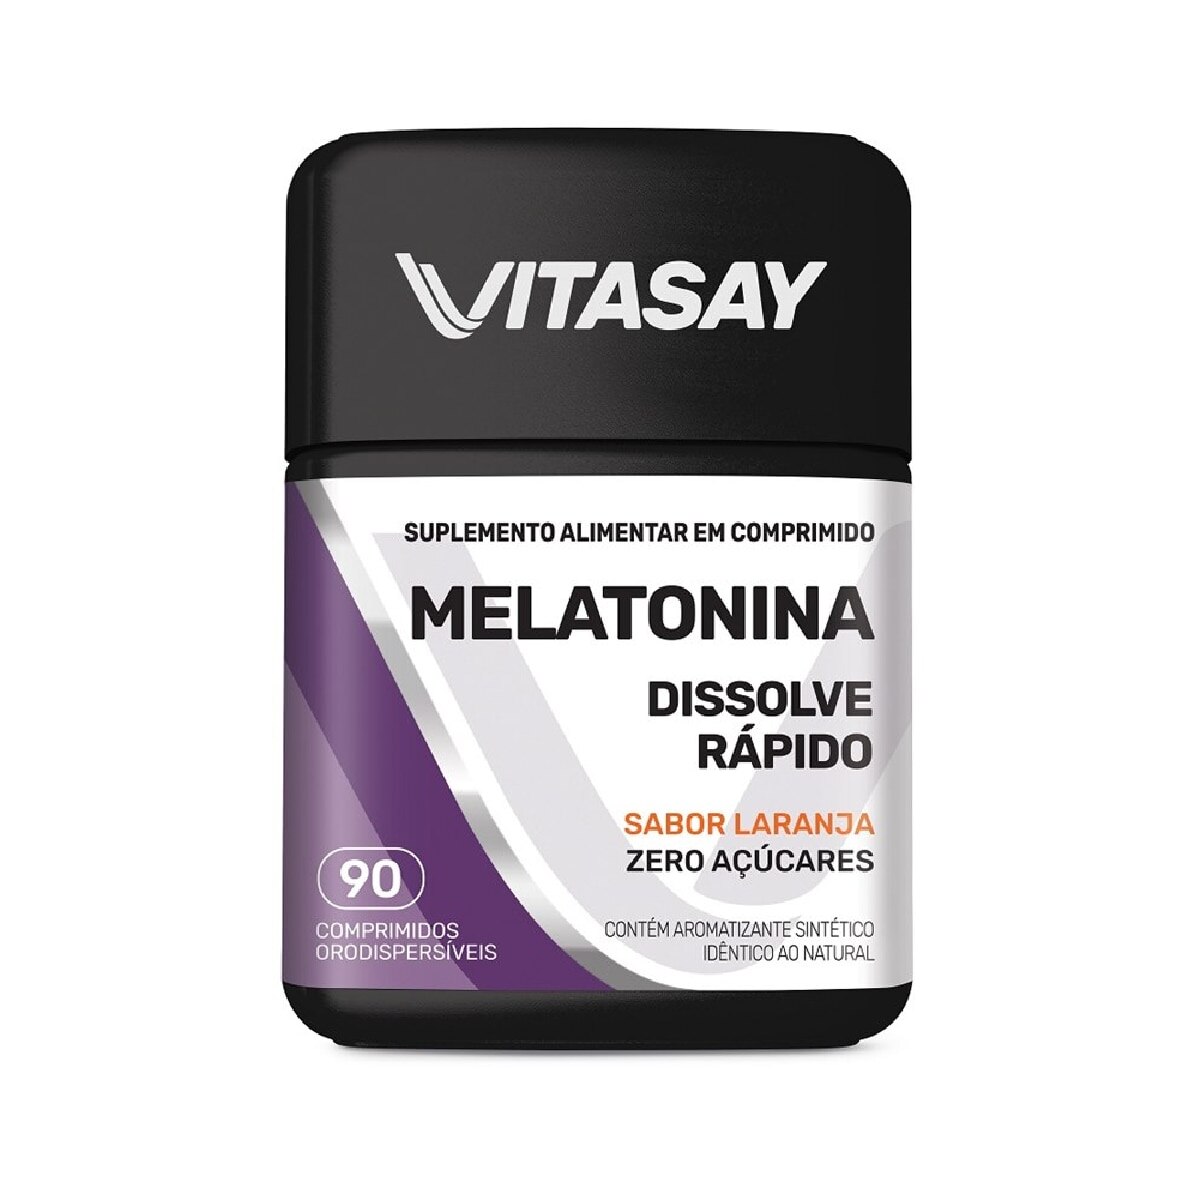 Melatonina Vitasay Sabor Laranja 90 Comprimidos Orodispersiveis